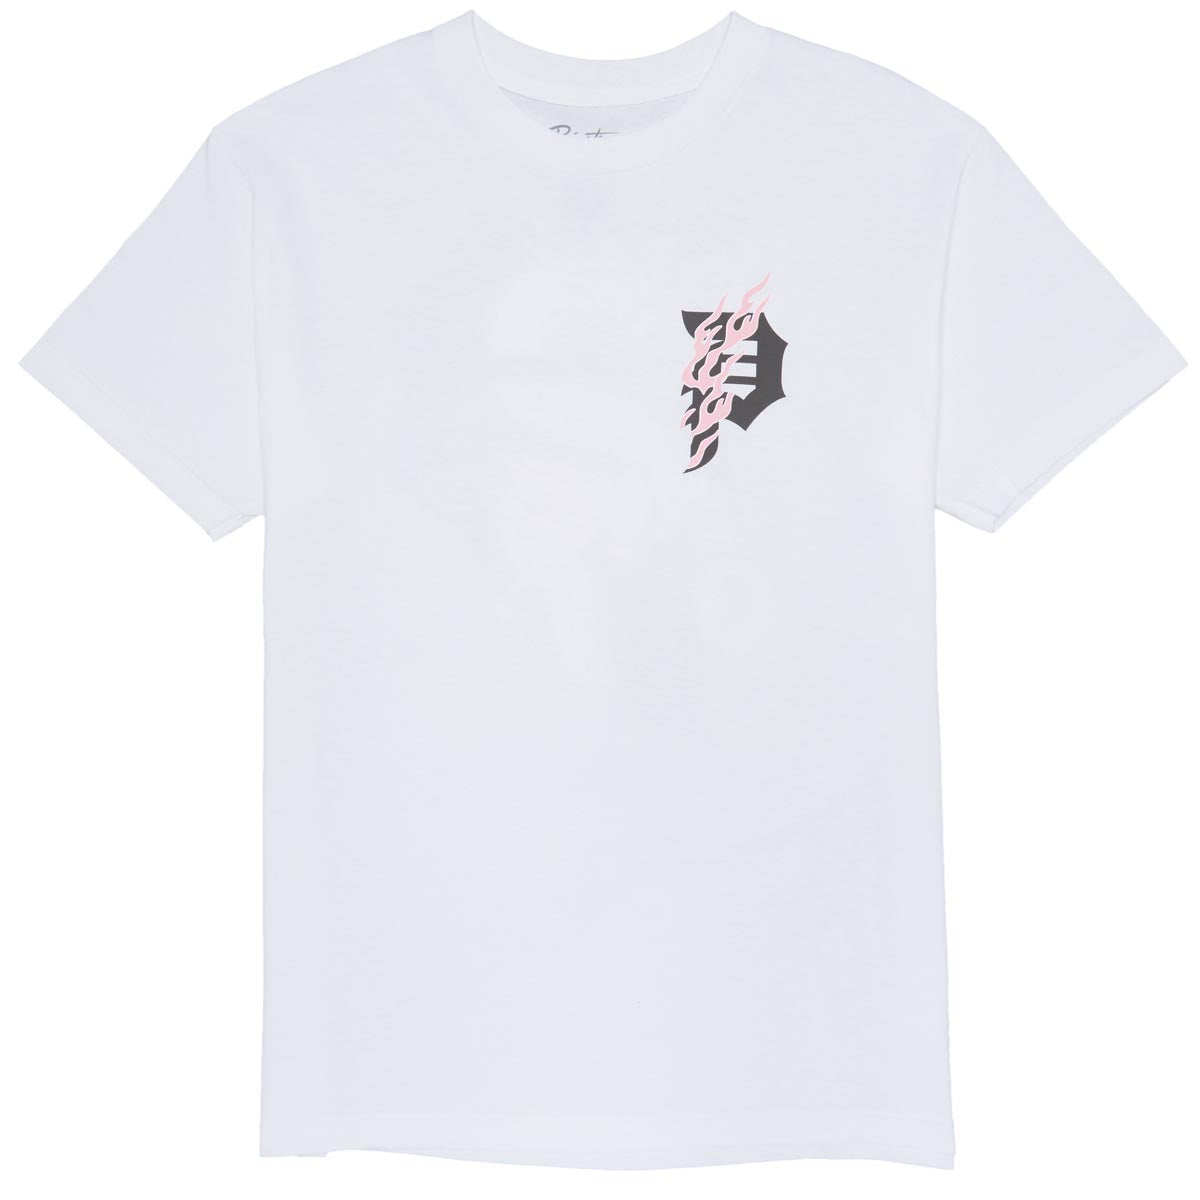 Primitive Honor T-Shirt - White image 2